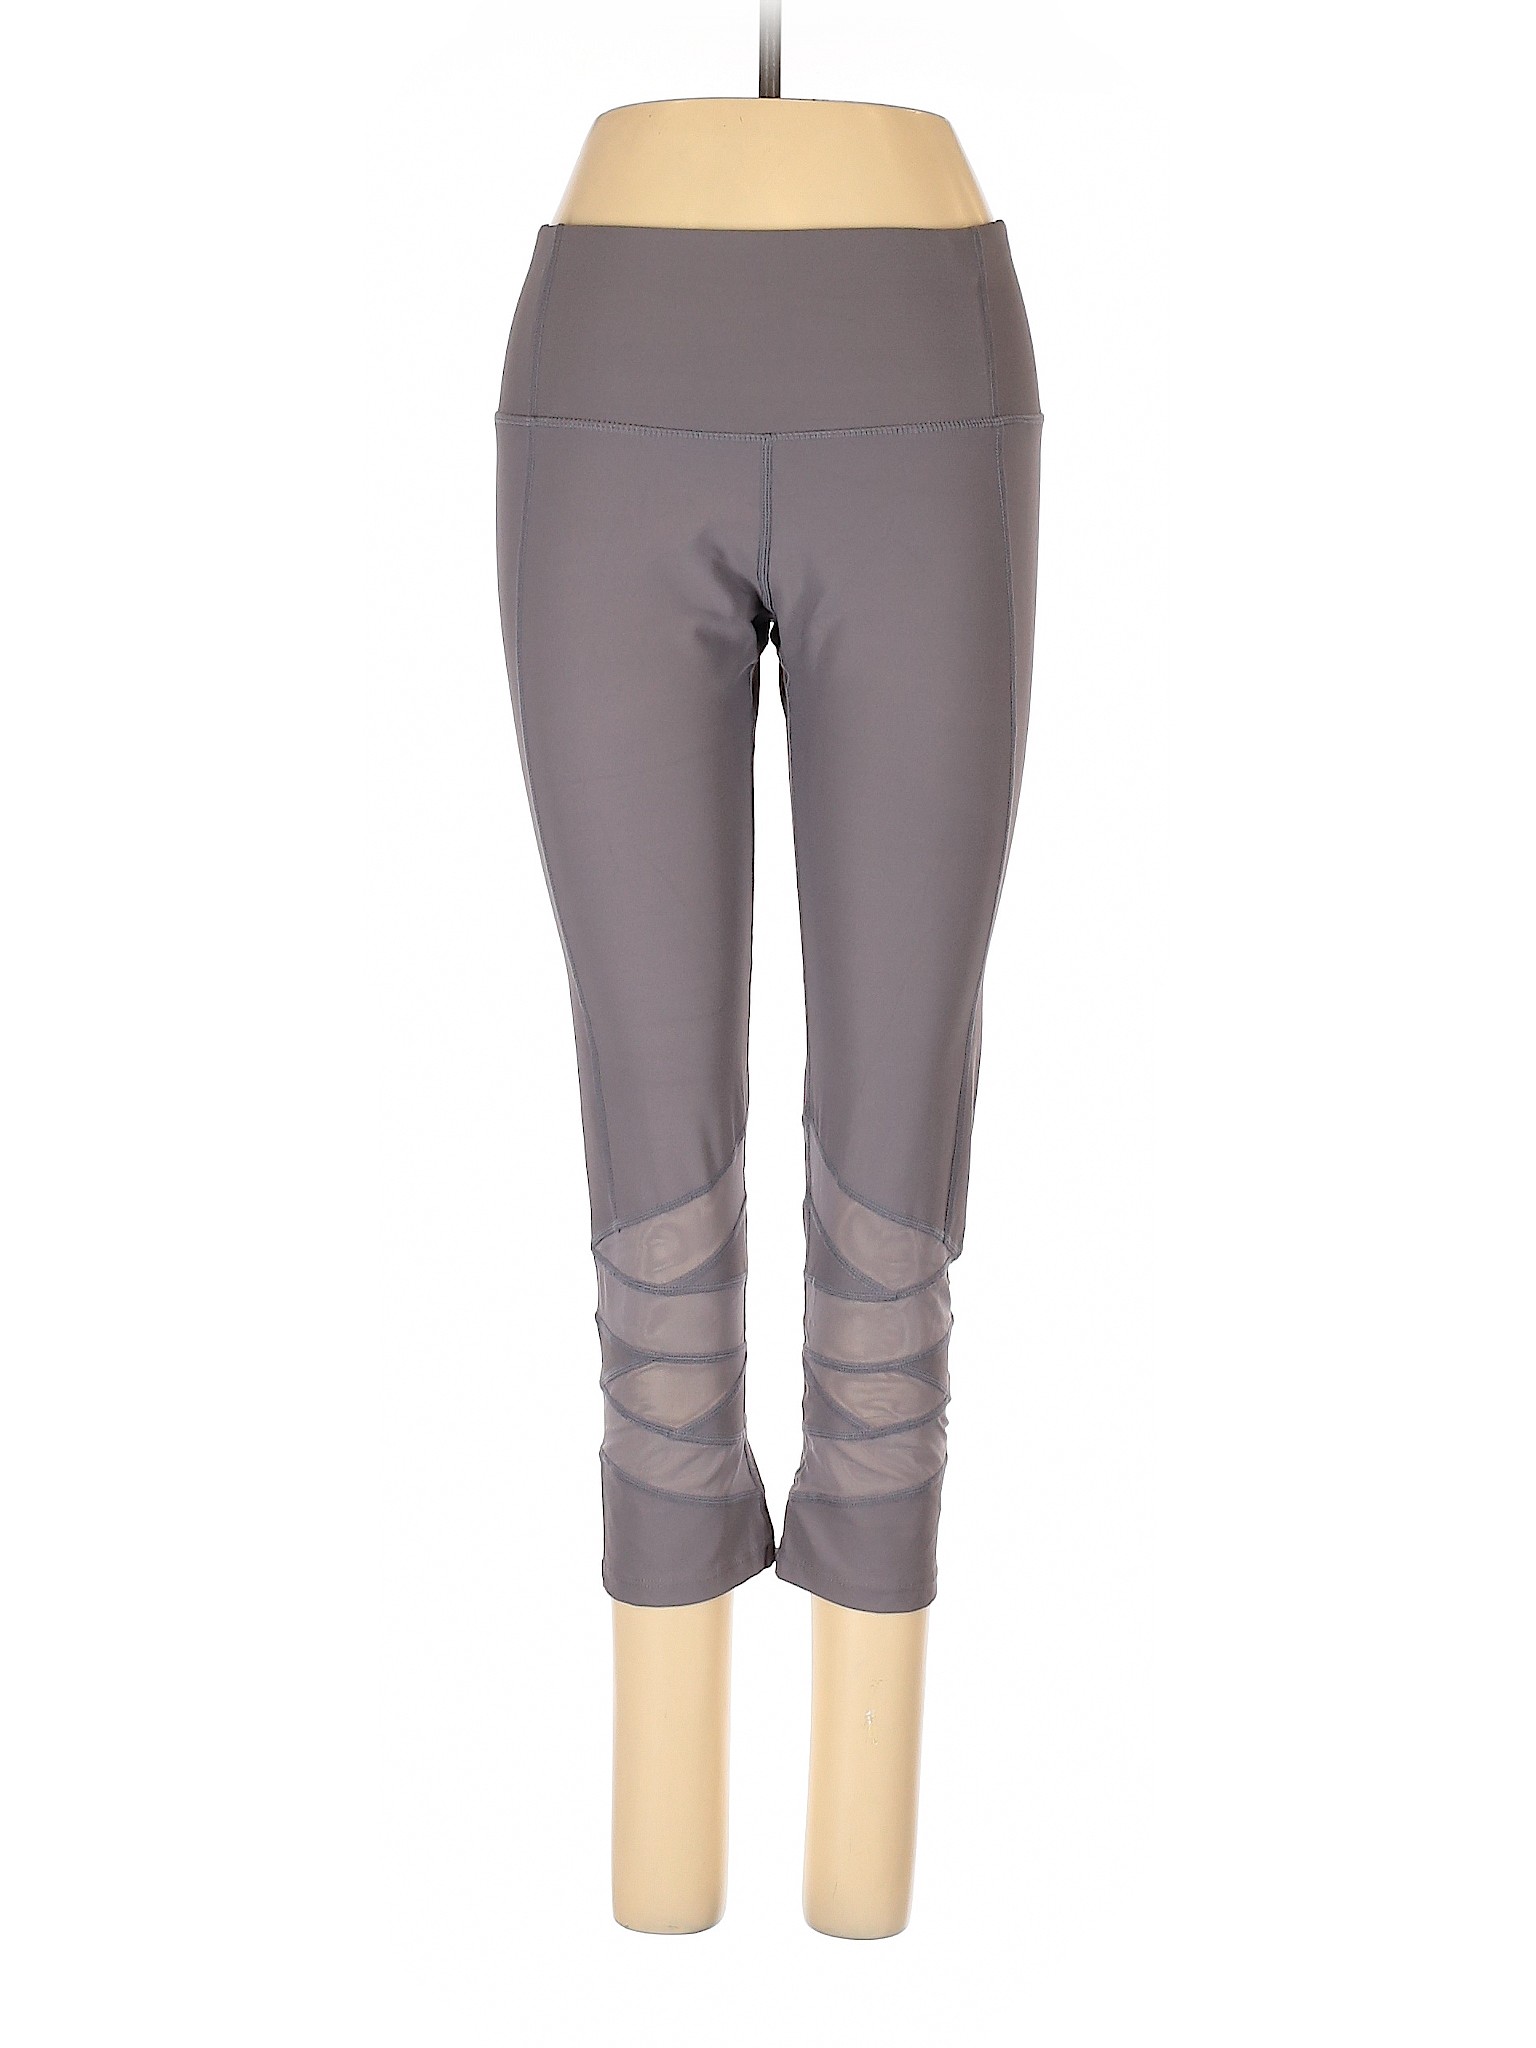 Apana Women Gray Active Pants S | eBay